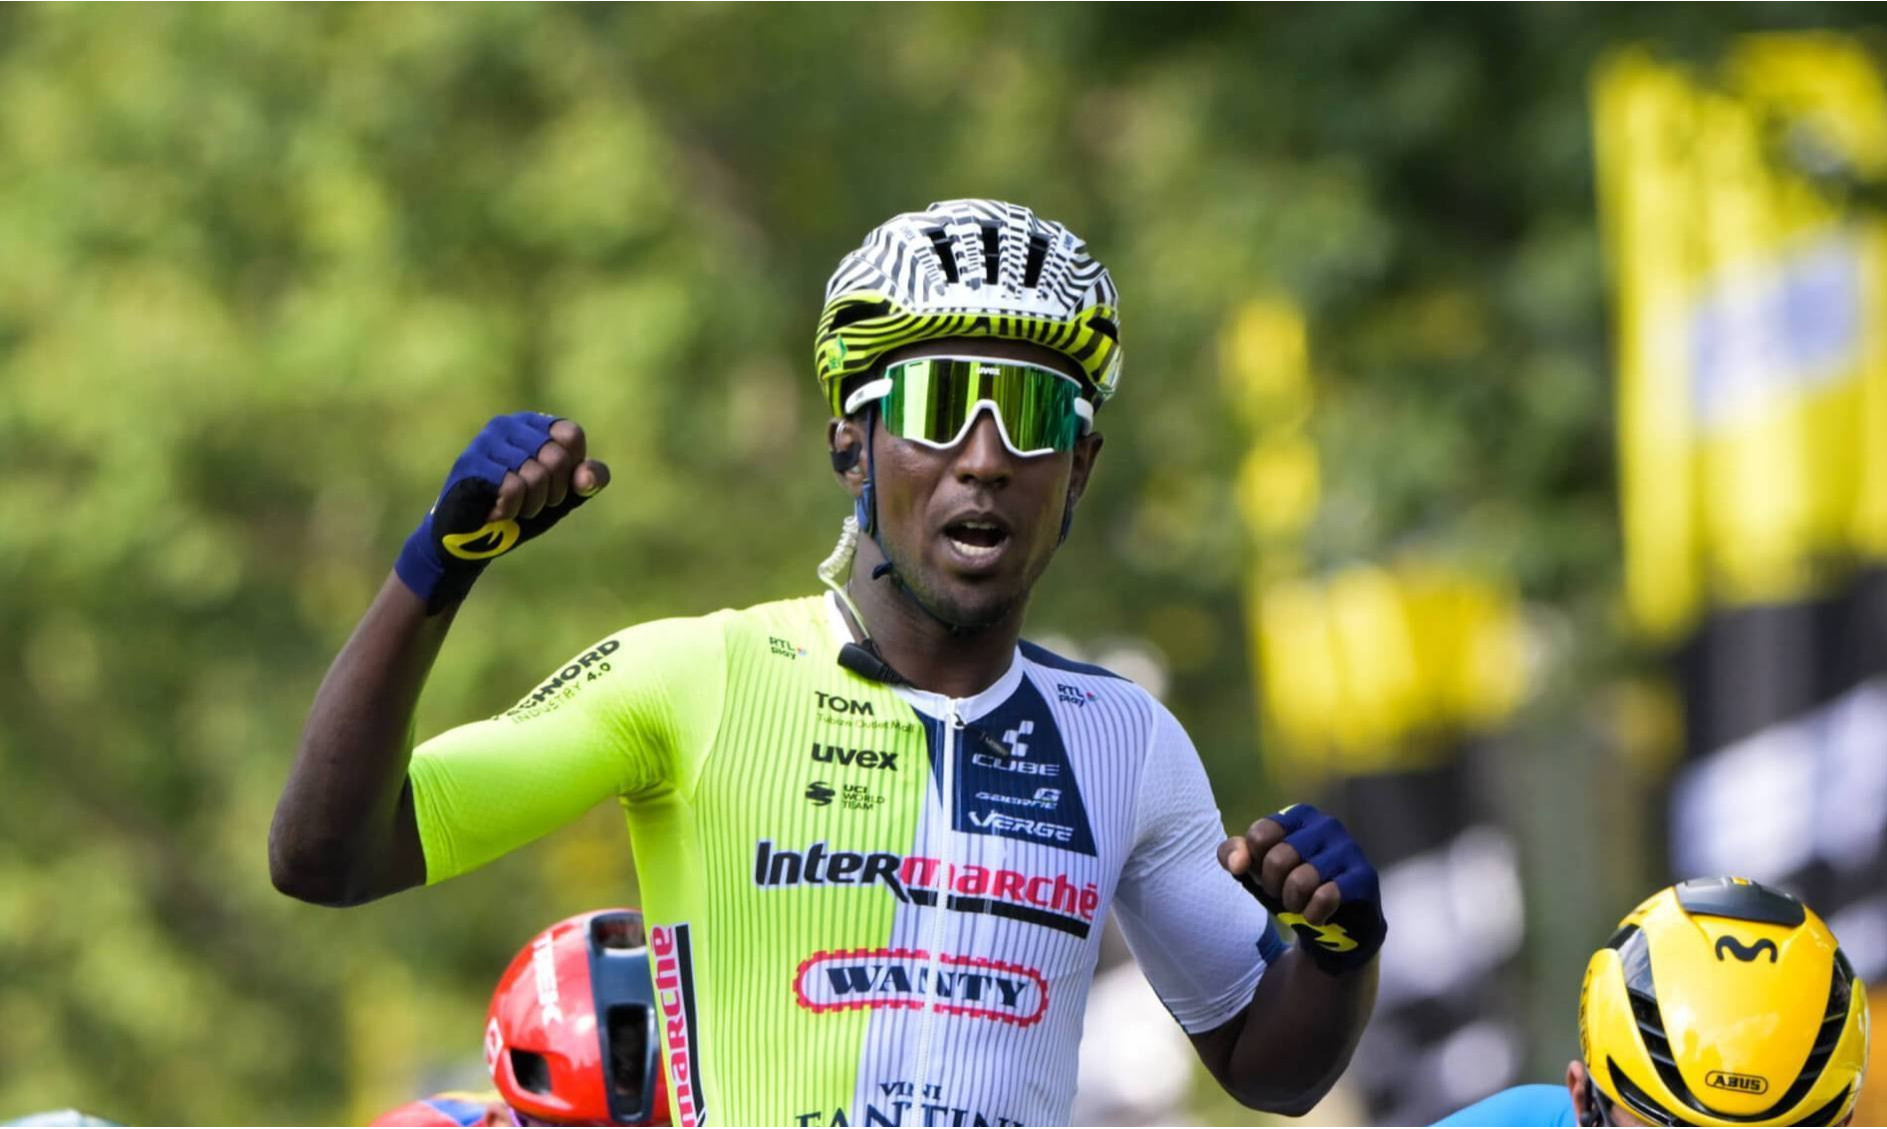 This Time for Africa: еритреєць Гірмай виграв 3 етап Тур де Франс